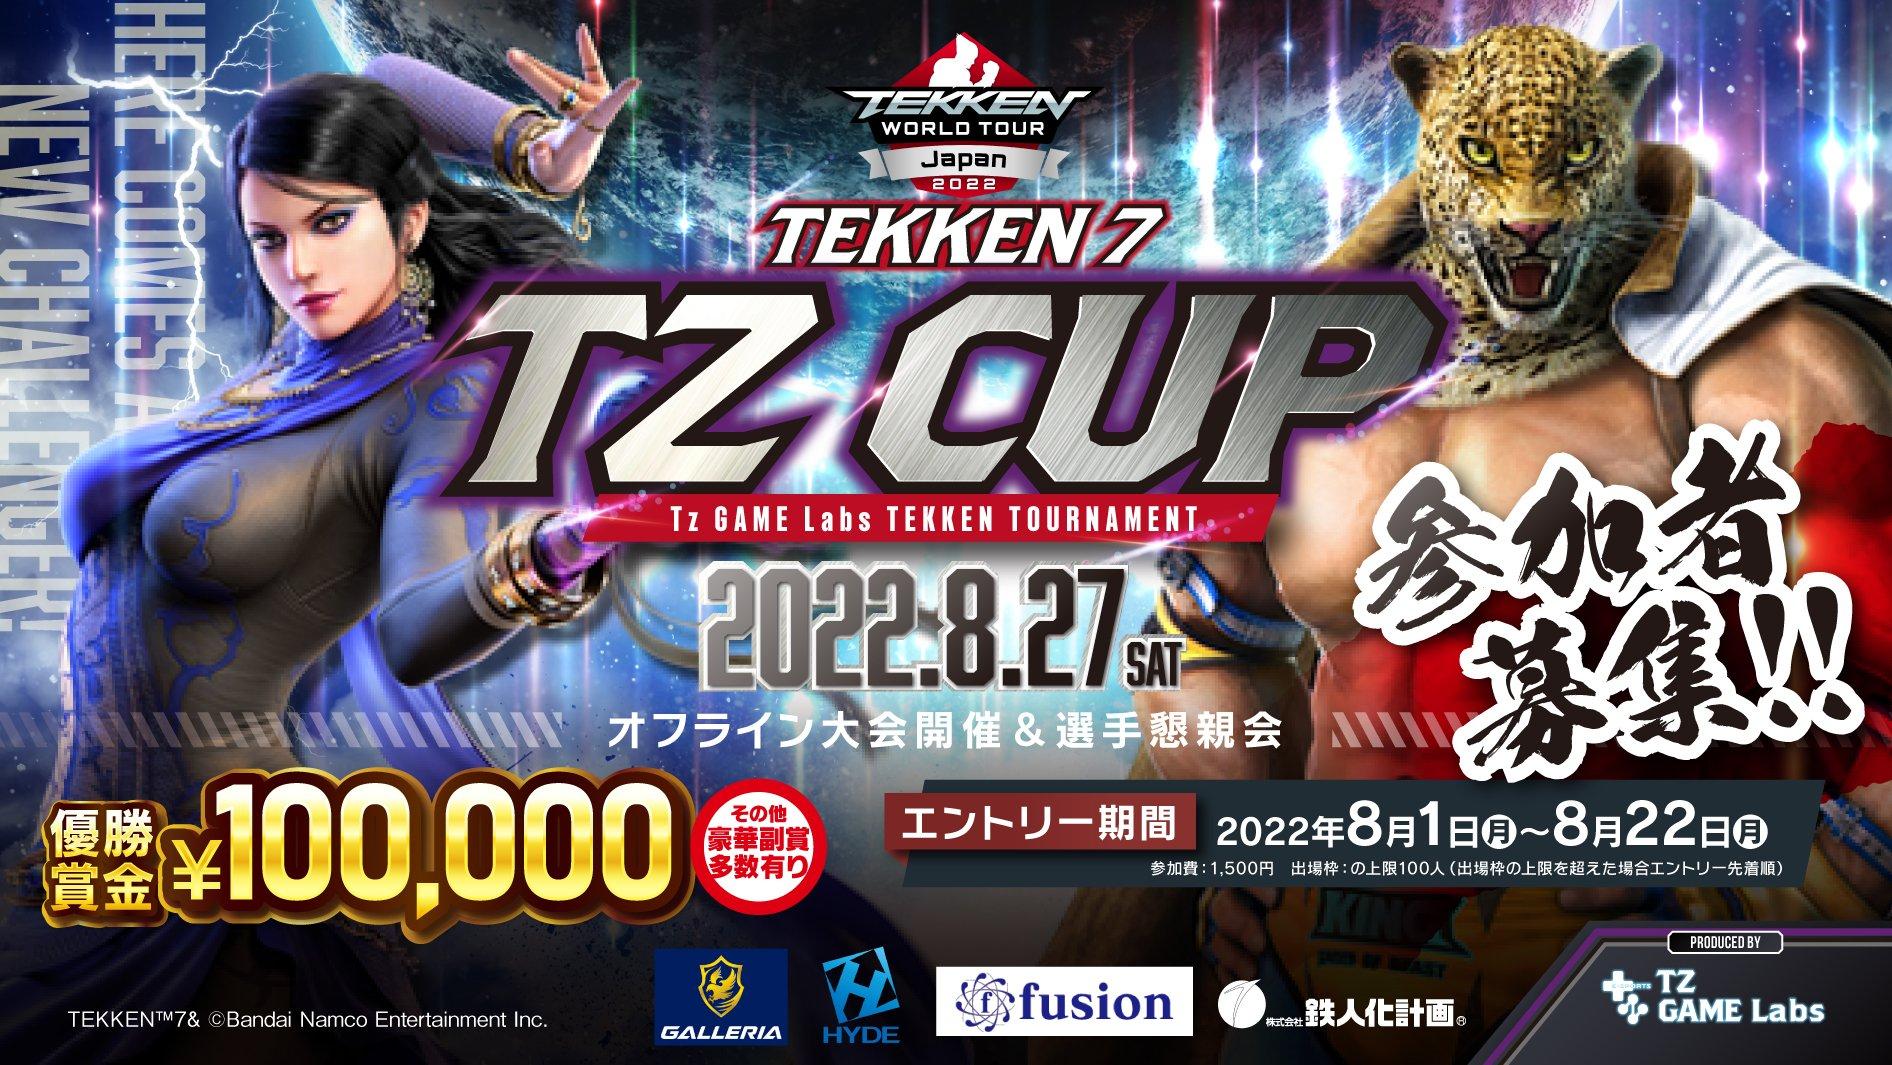 TWT TZ CUP feature image